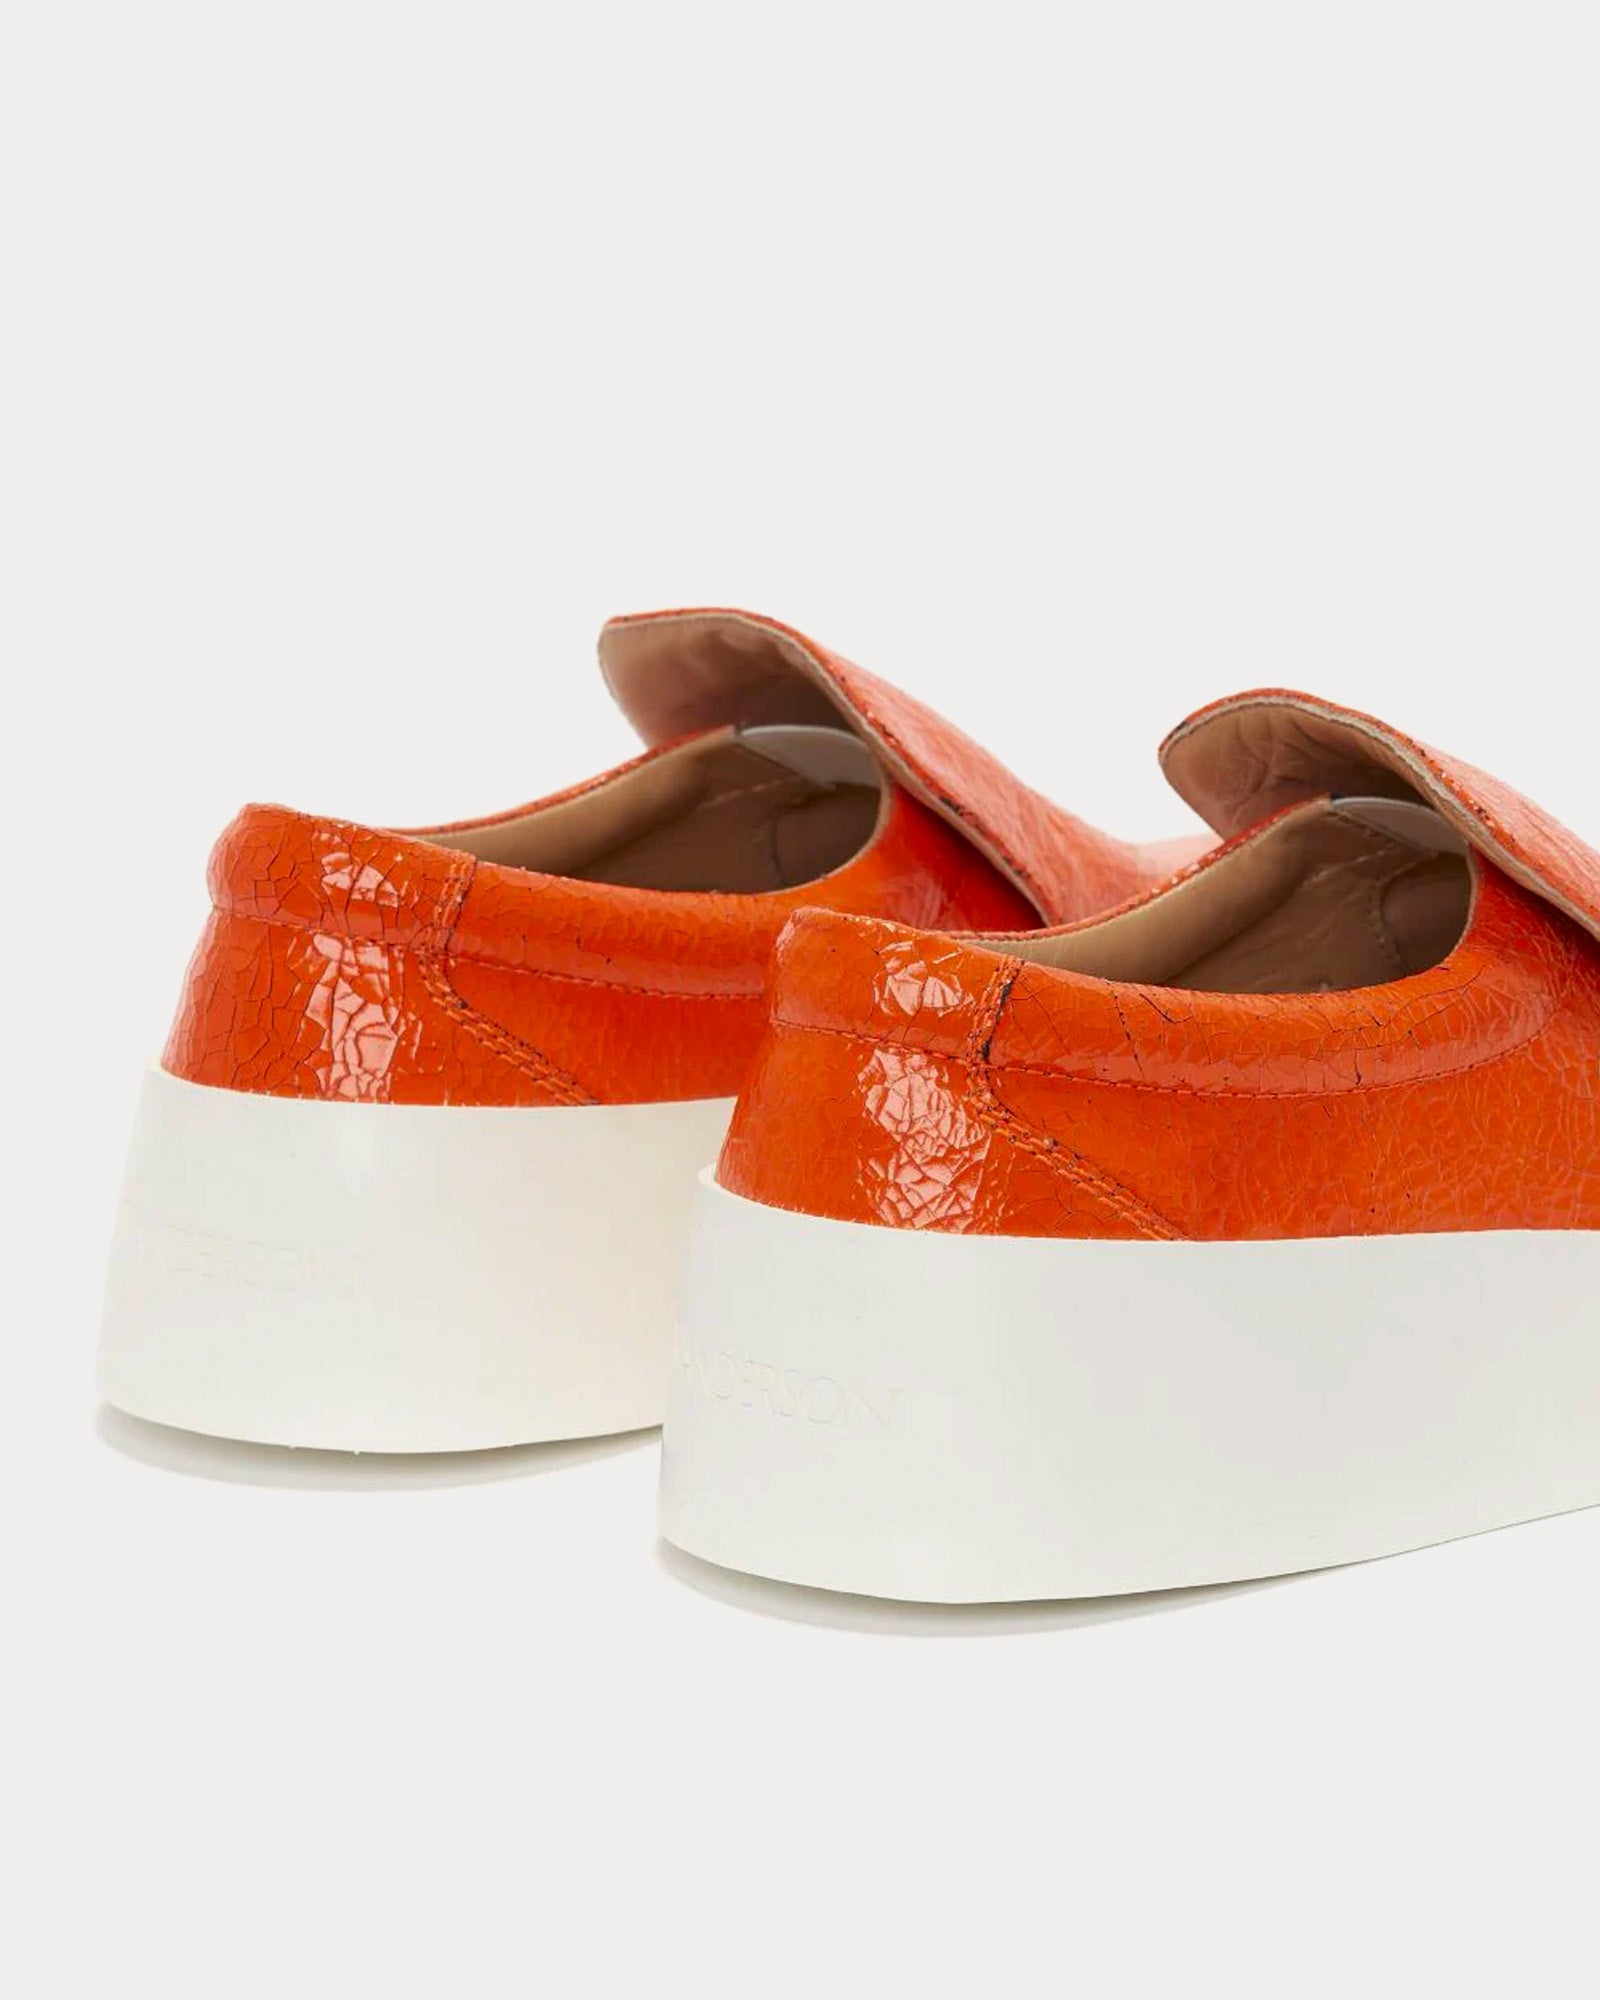 JW Anderson - Cracked Leather Fluro Orange Slip On Sneakers